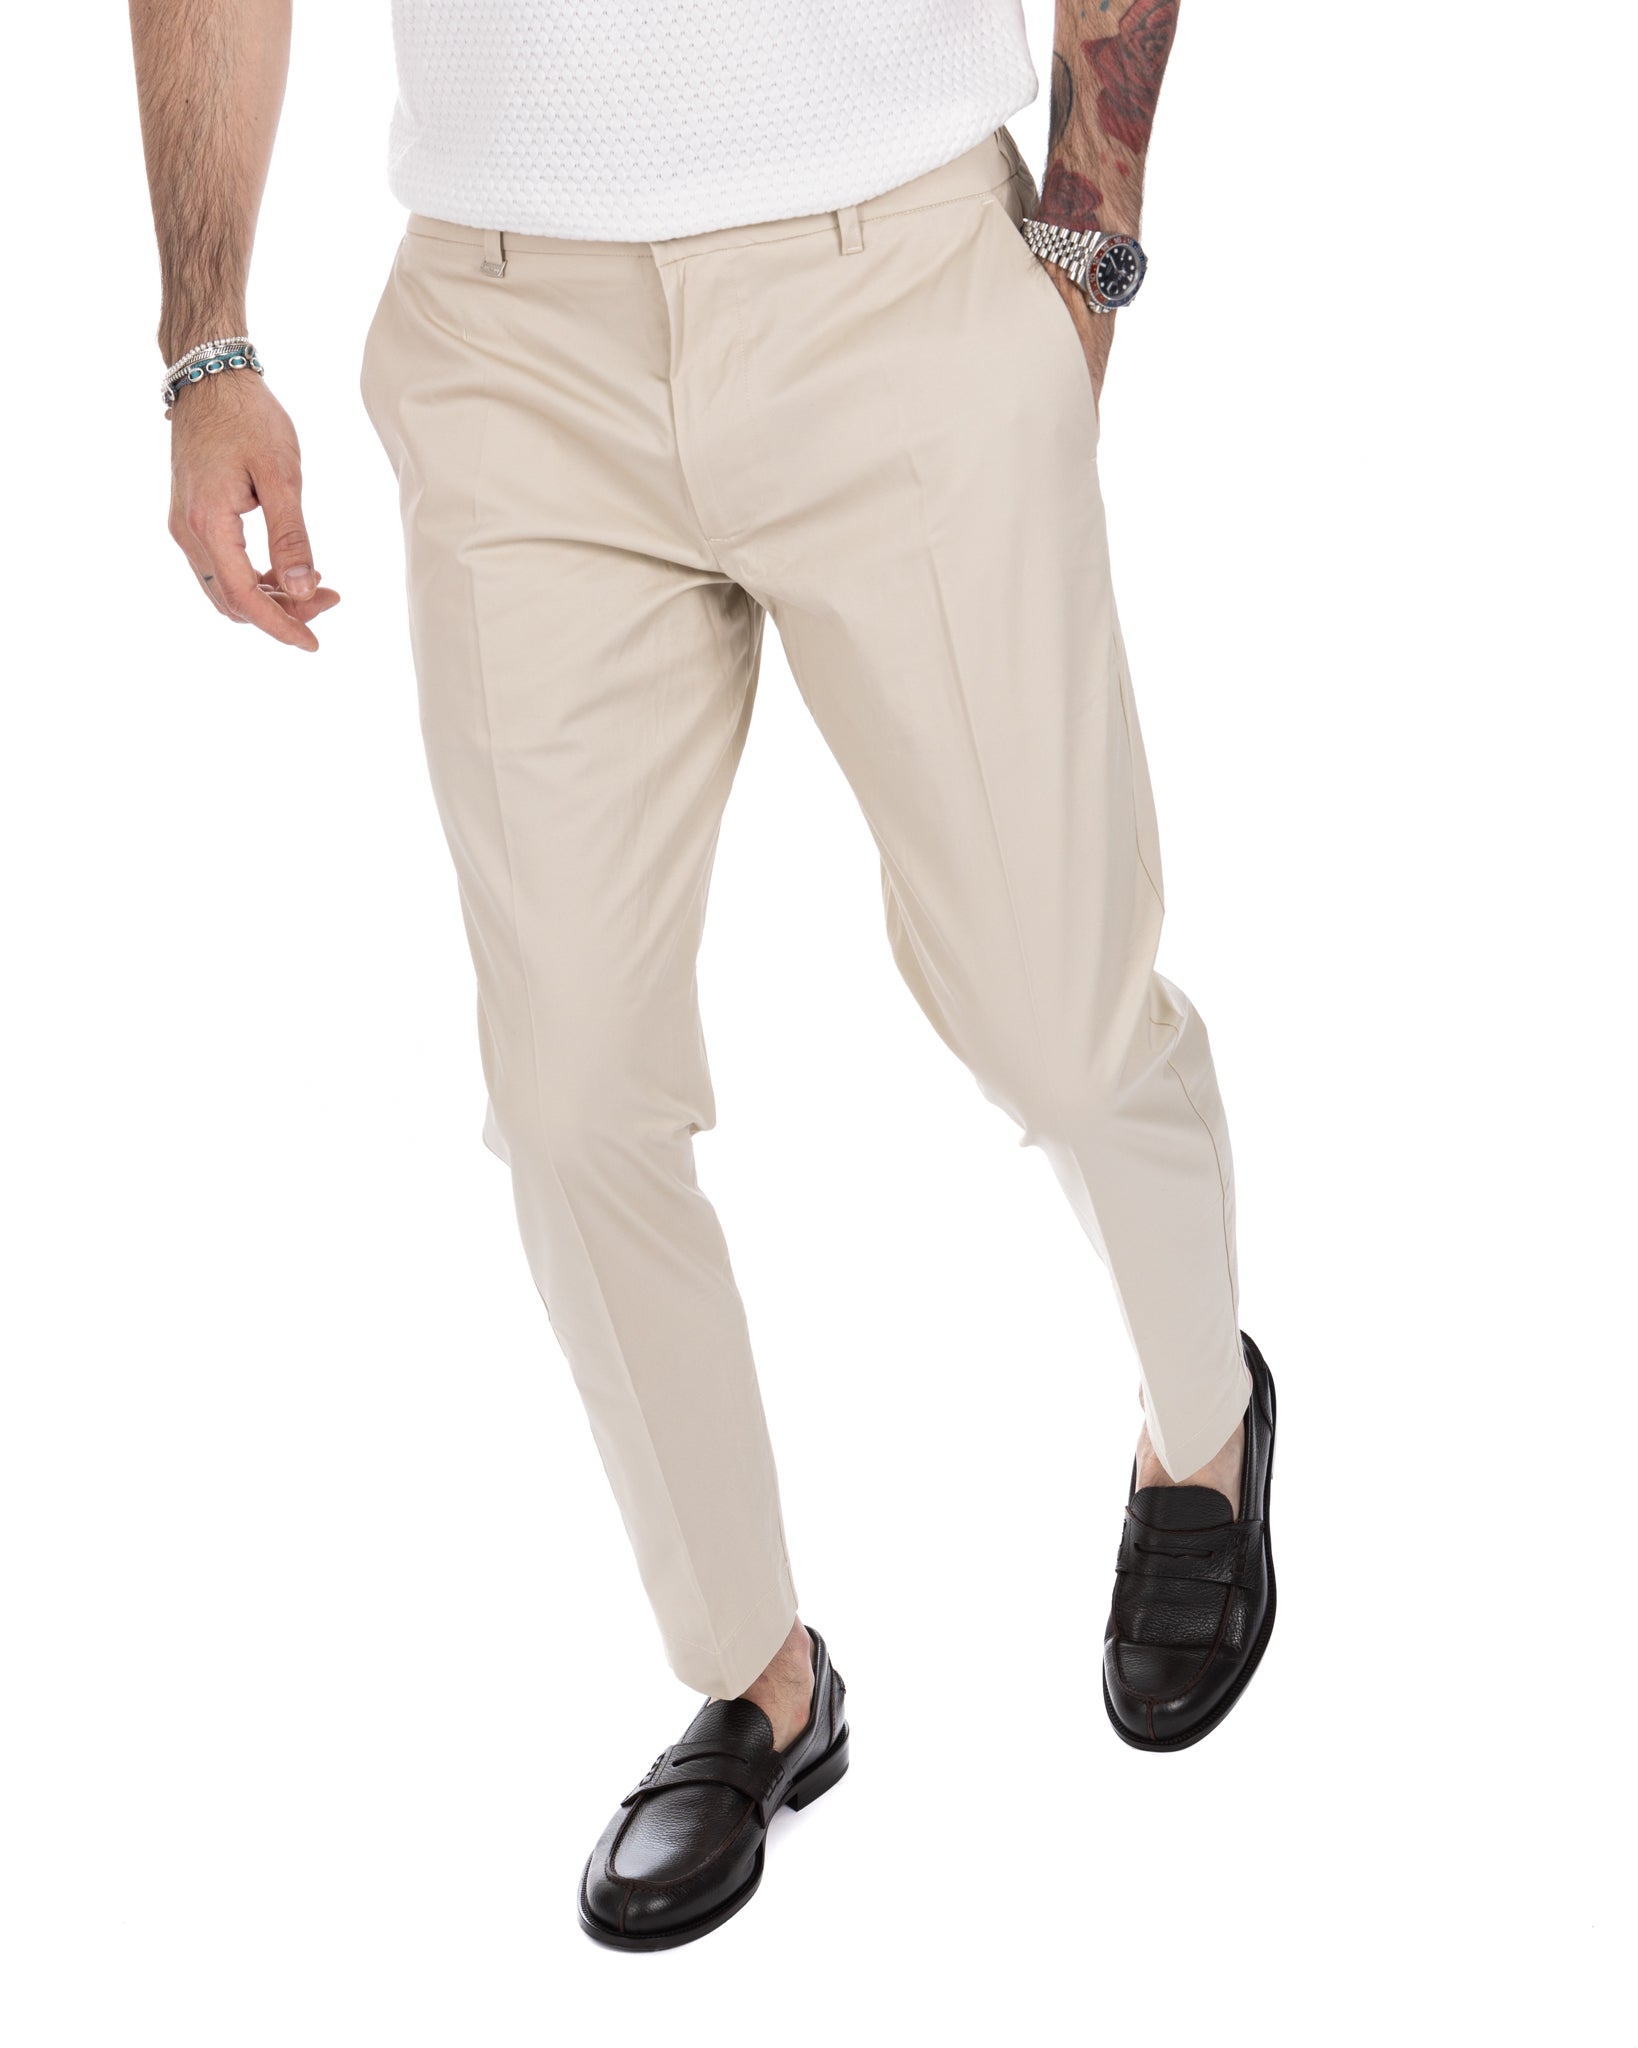 Elder - beige capri trousers in summer cotton